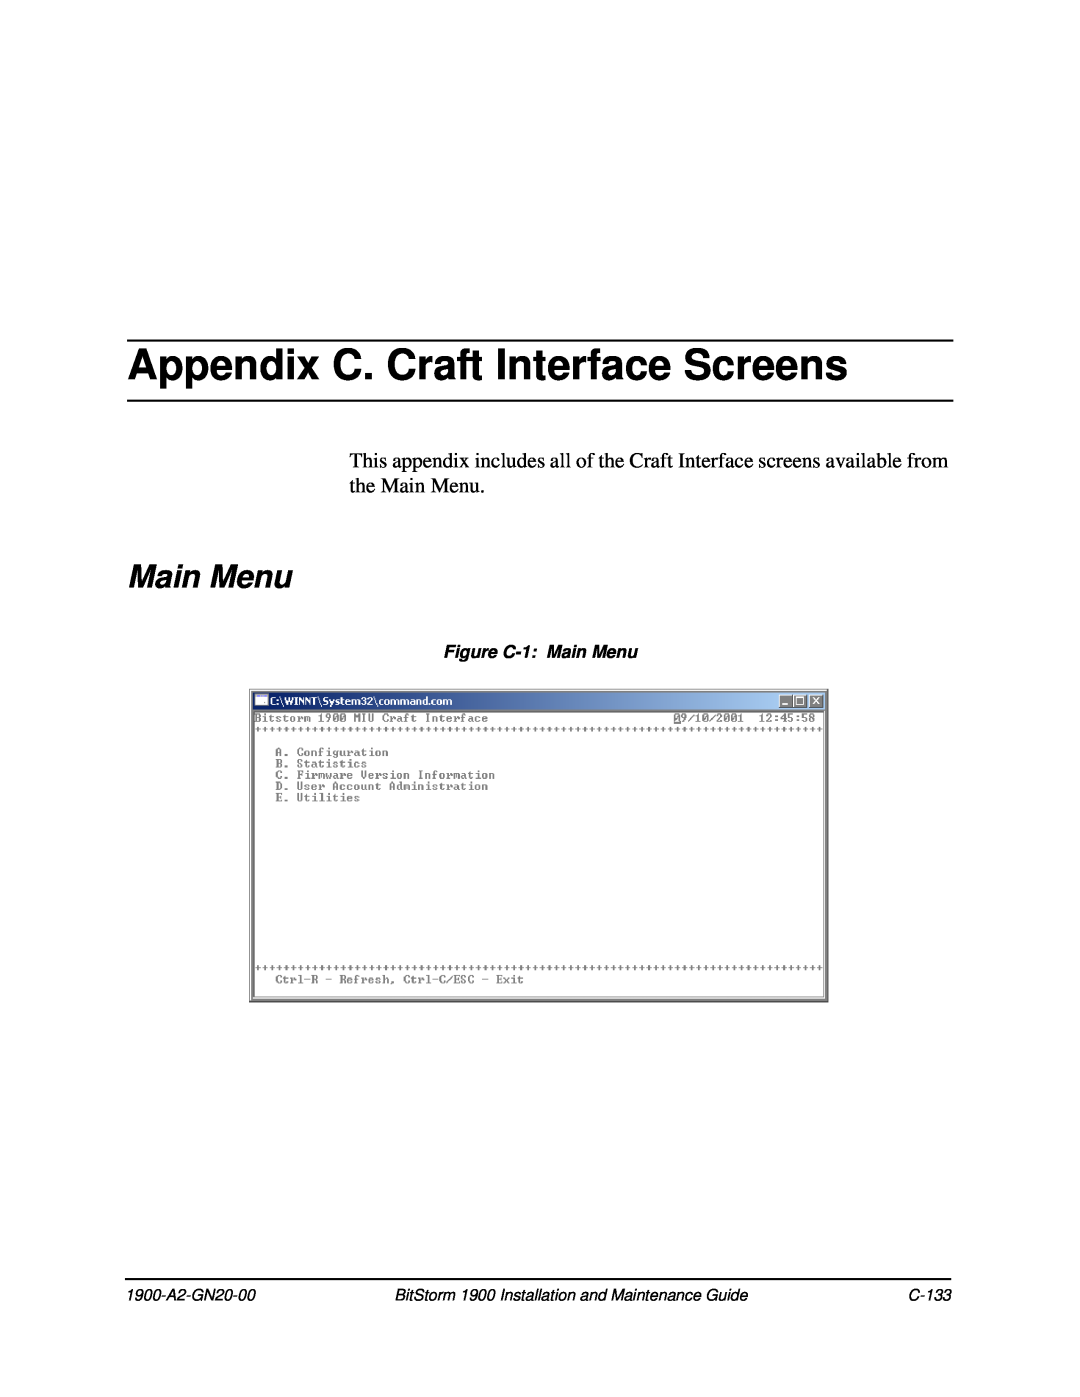 Paradyne manual Appendix C. Craft Interface Screens, Figure C-1 Main Menu, 1900-A2-GN20-00, C-133 